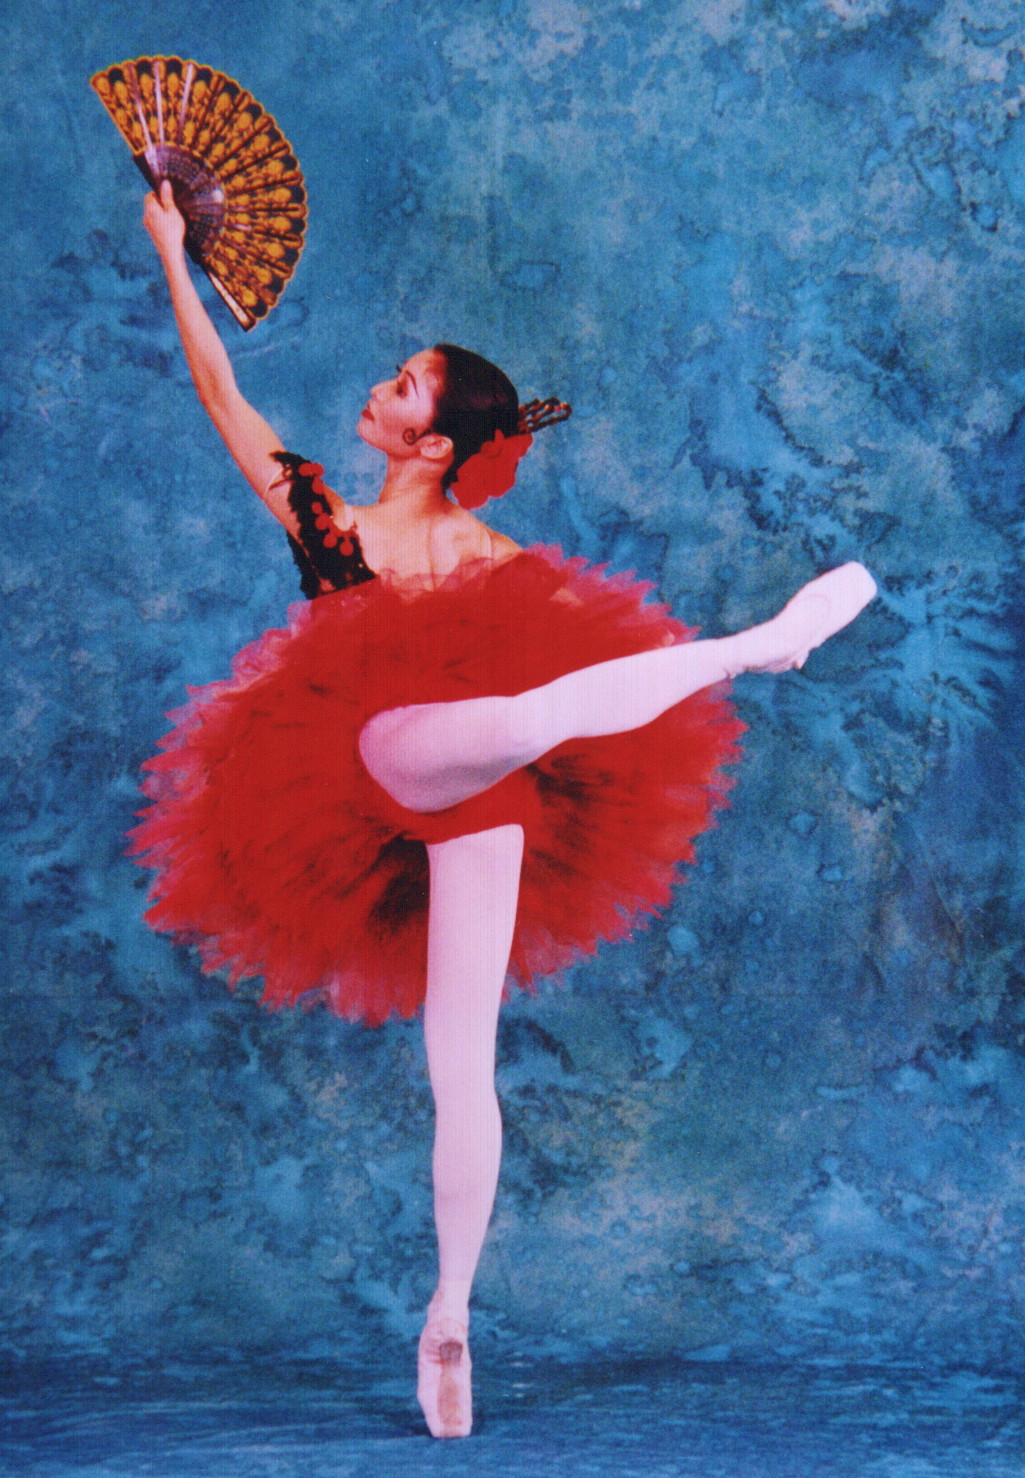 Ballet dancer: Swan Lake